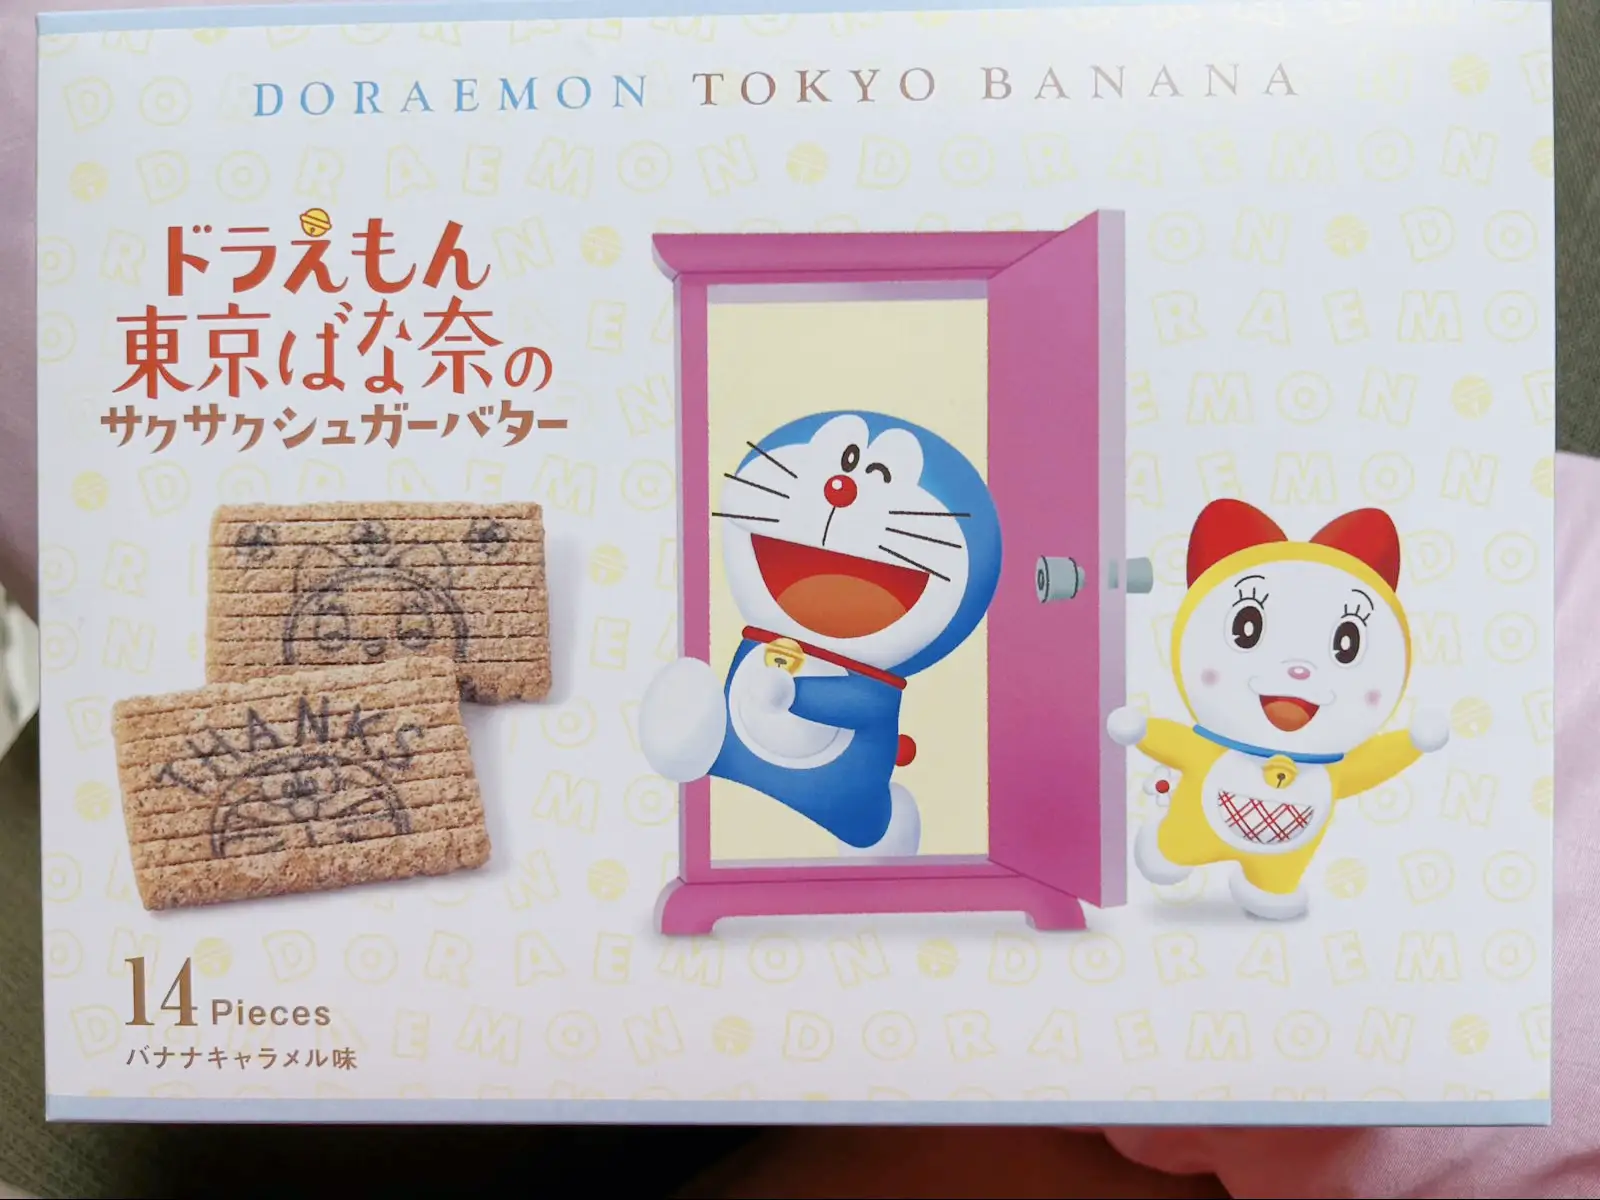 Doraemon. 's images